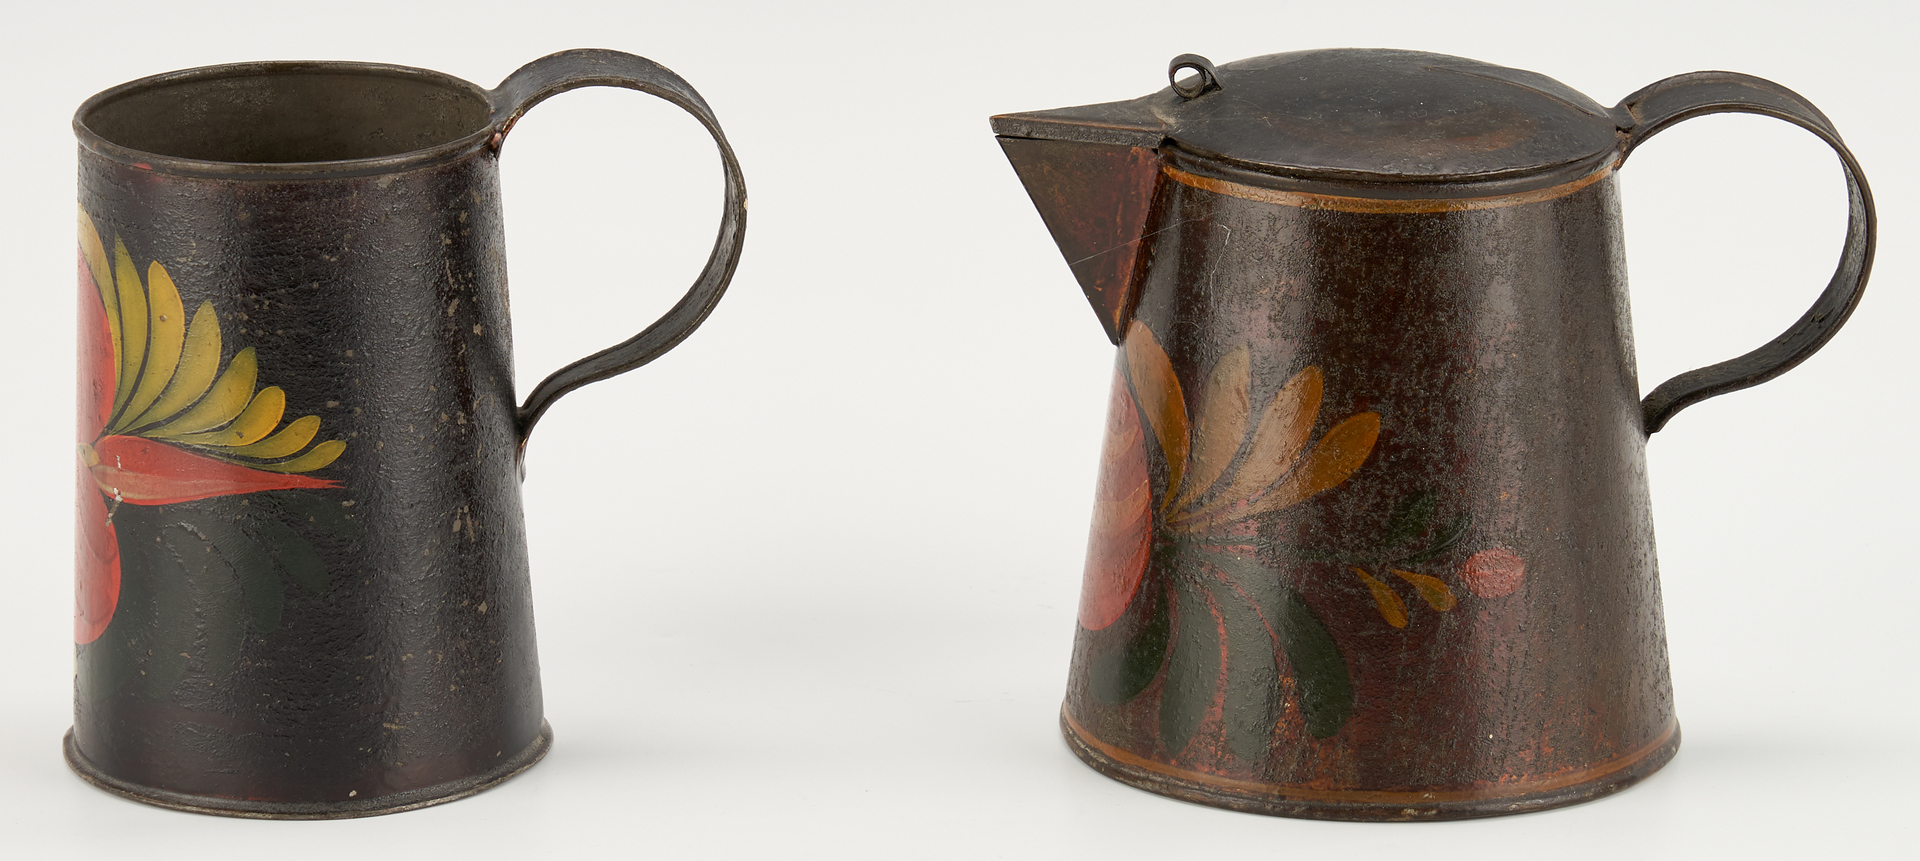 Lot 267: Two Tole Coffee Pots, Jug and Mug, 19th C.